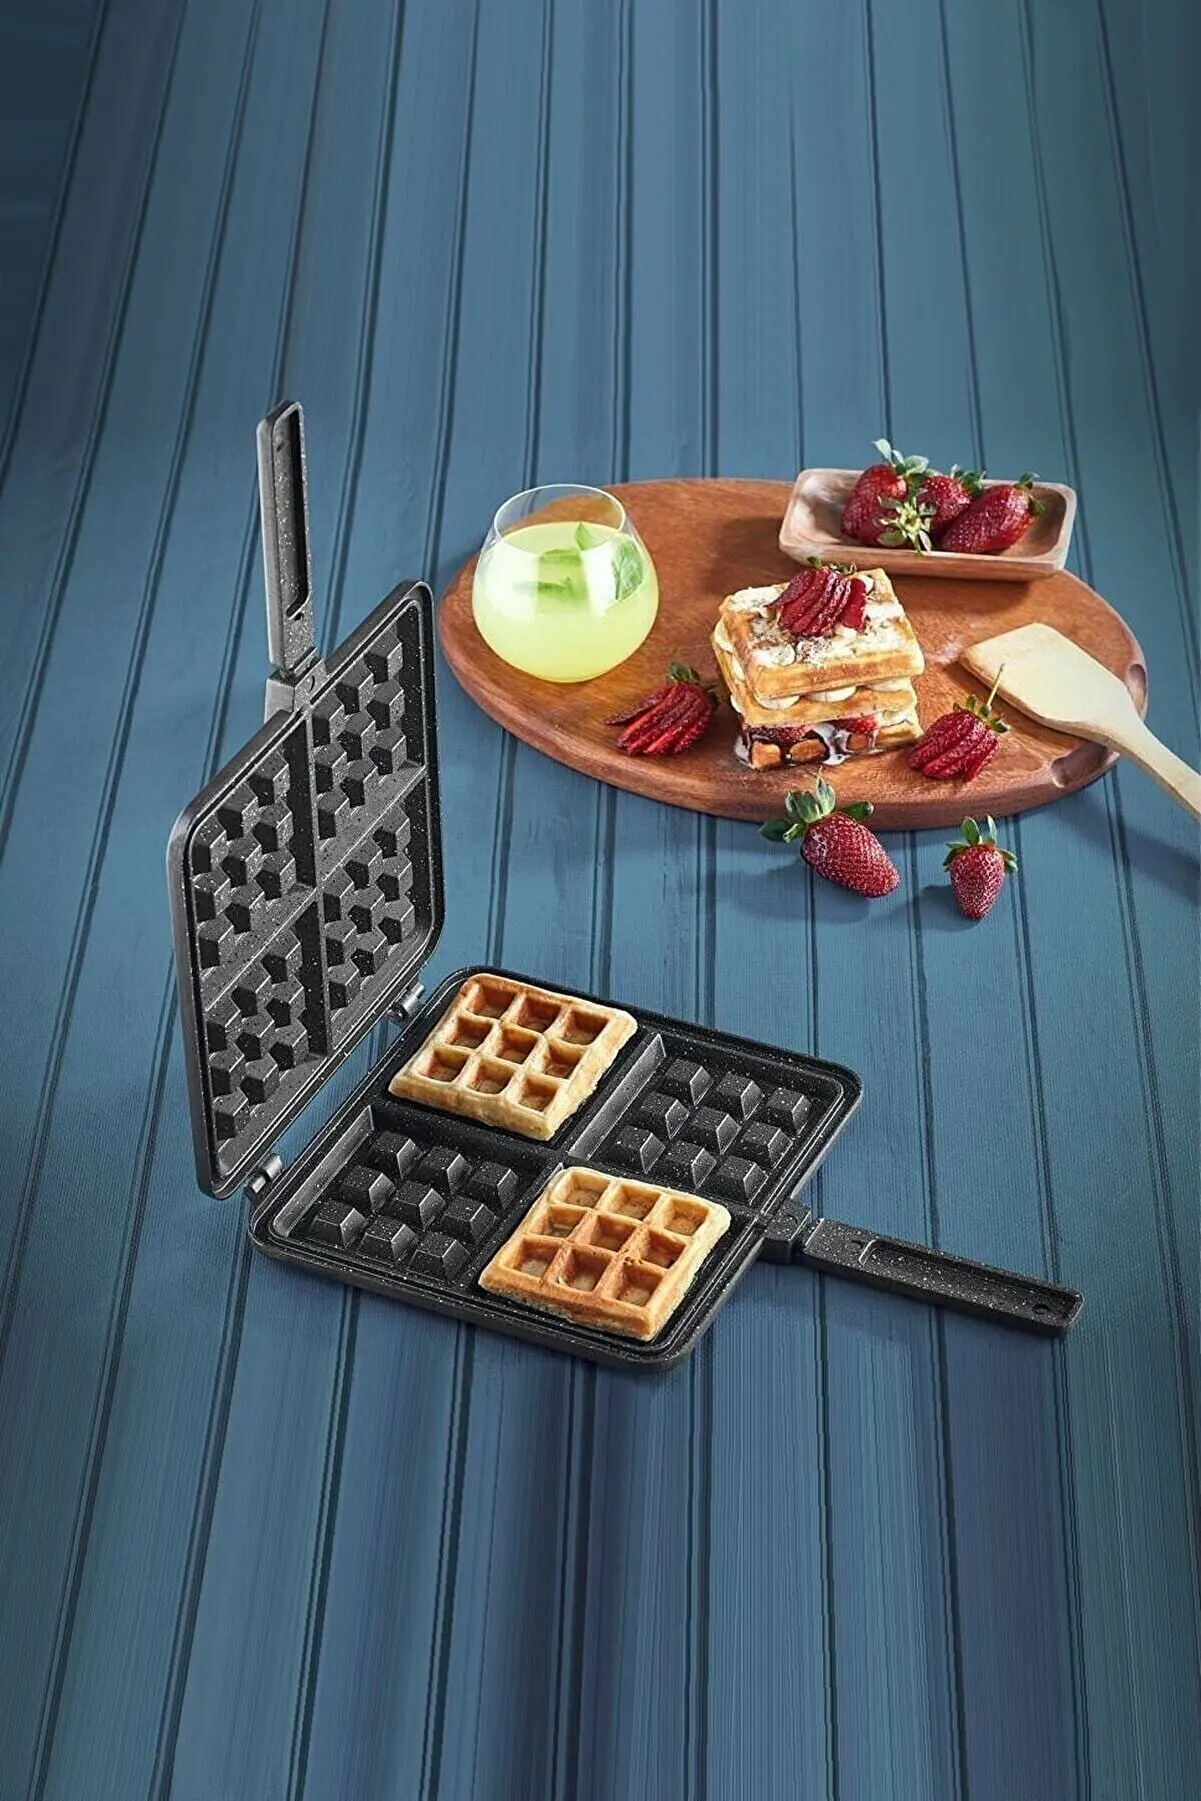 Cast Iron Waffle Maker Toast Sandwich Kitchen Accessories 22x22 Size Fireproof Non-Stick Breakfast Cooker Pans Pots Cooking